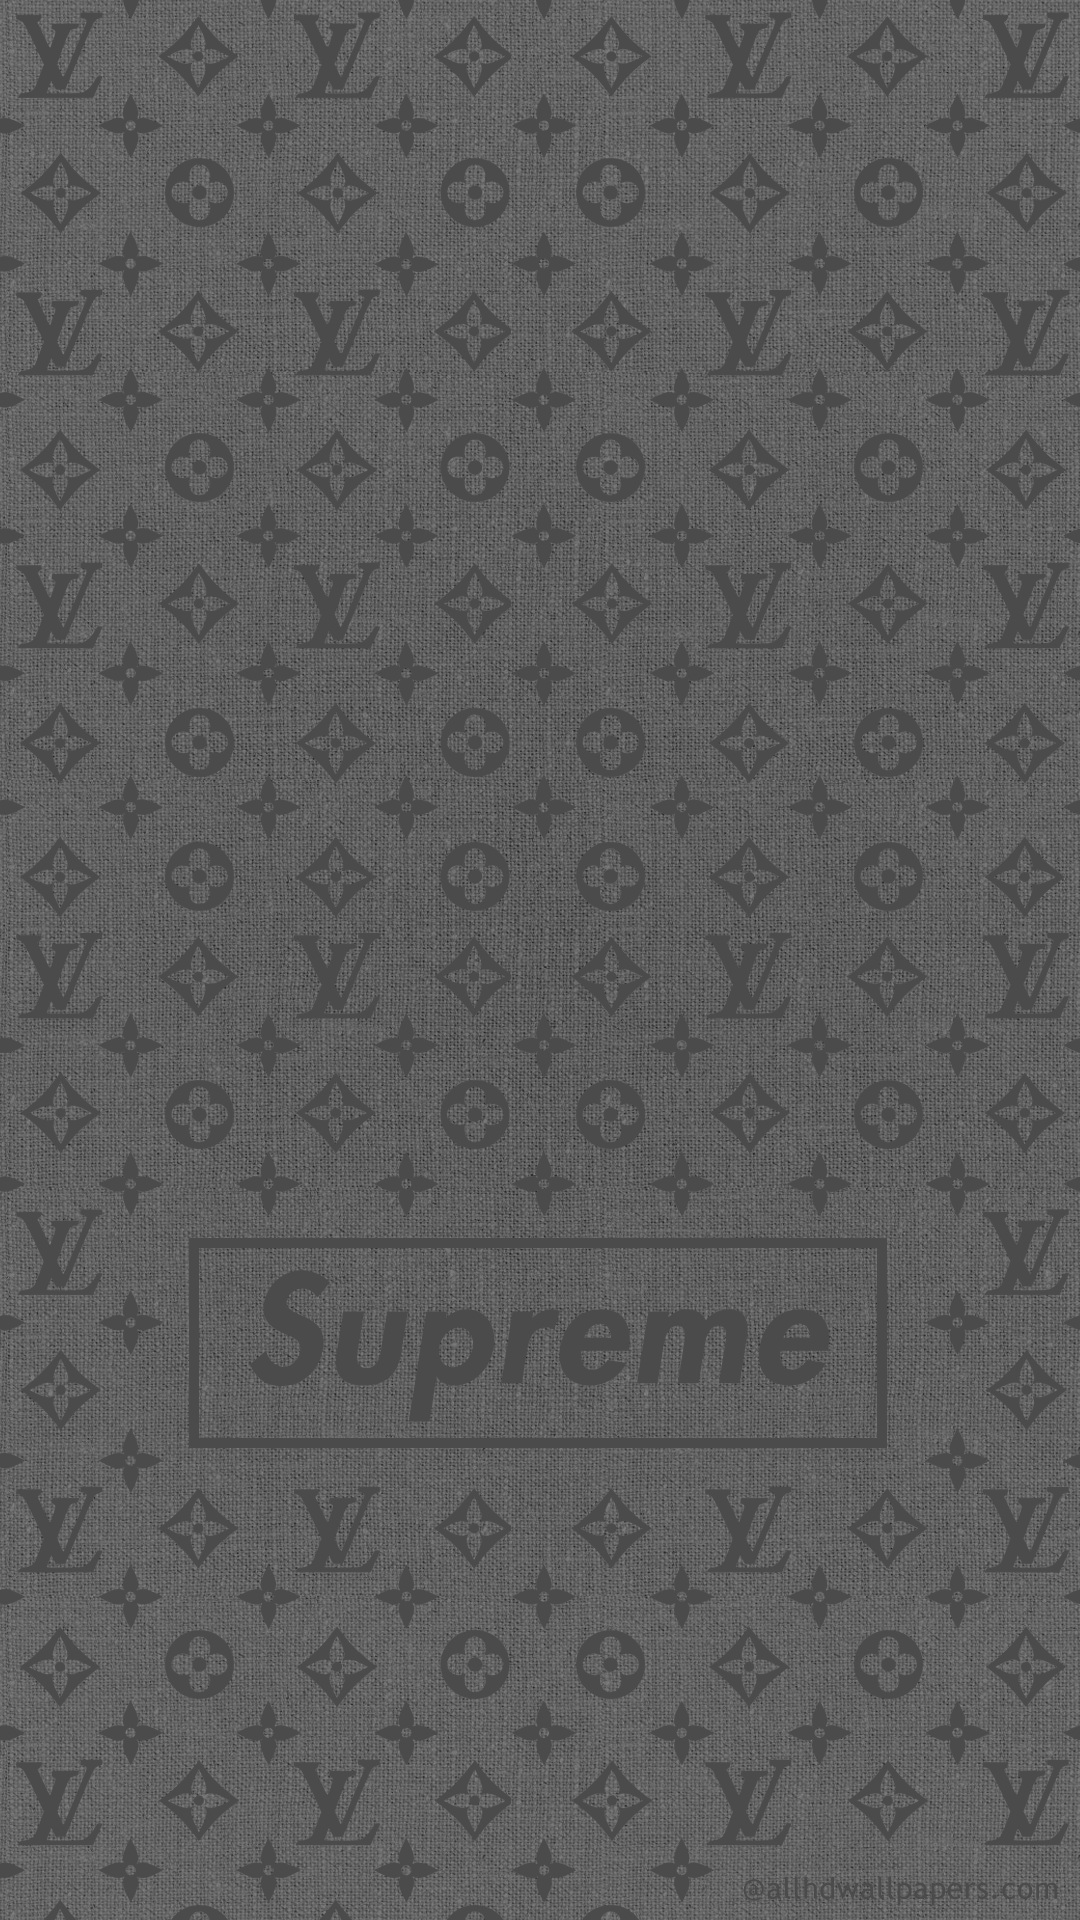 70 Supreme Wallpapers in 4K   AllHDWallpapers